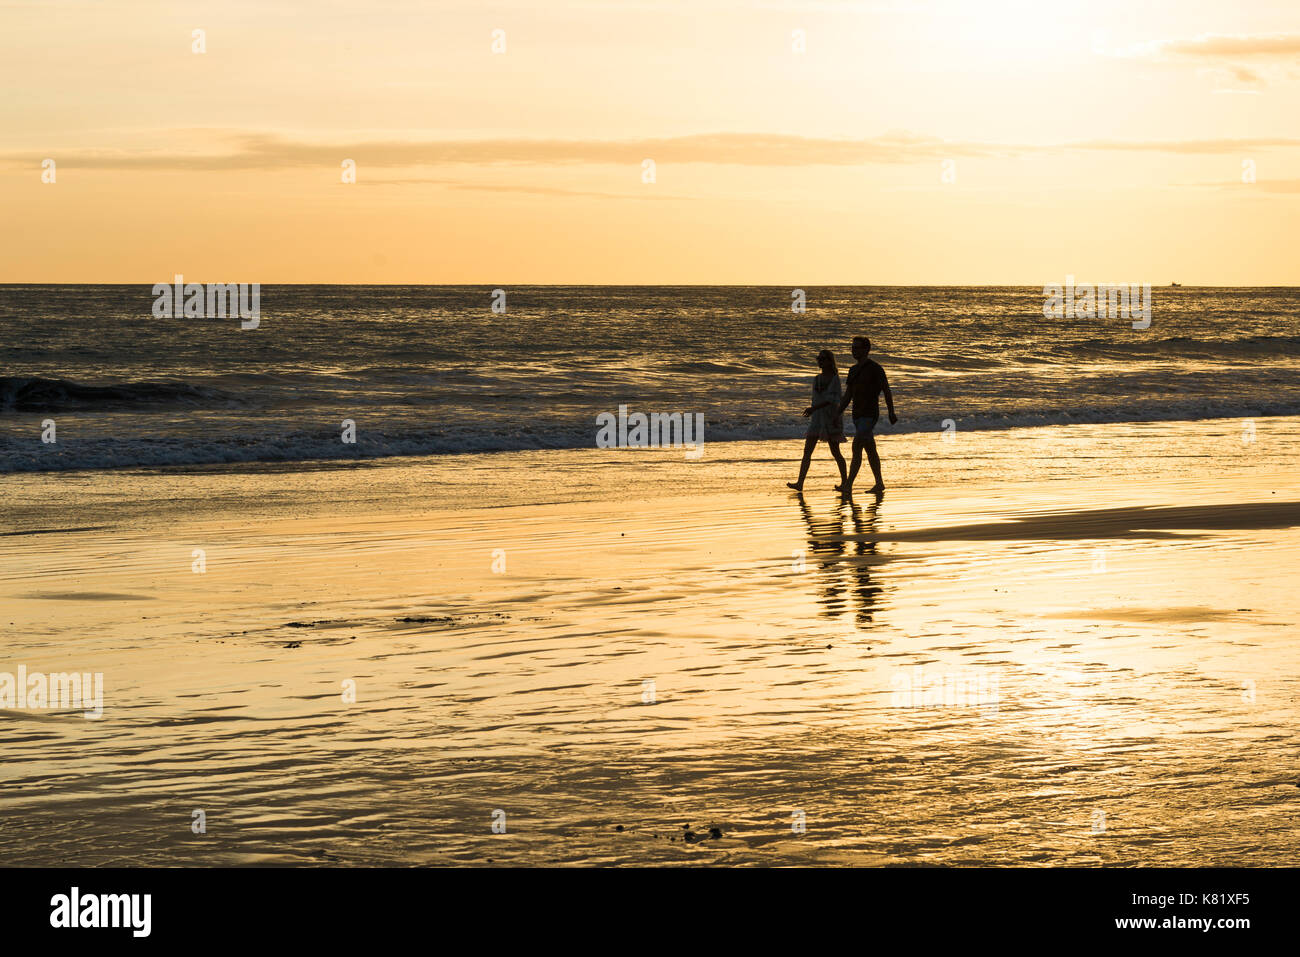 Couple, Man and Woman, Walk on the beach, Sunset, Playa Espadilla, National Park Manuel Antonio, Costa Rica Stock Photo